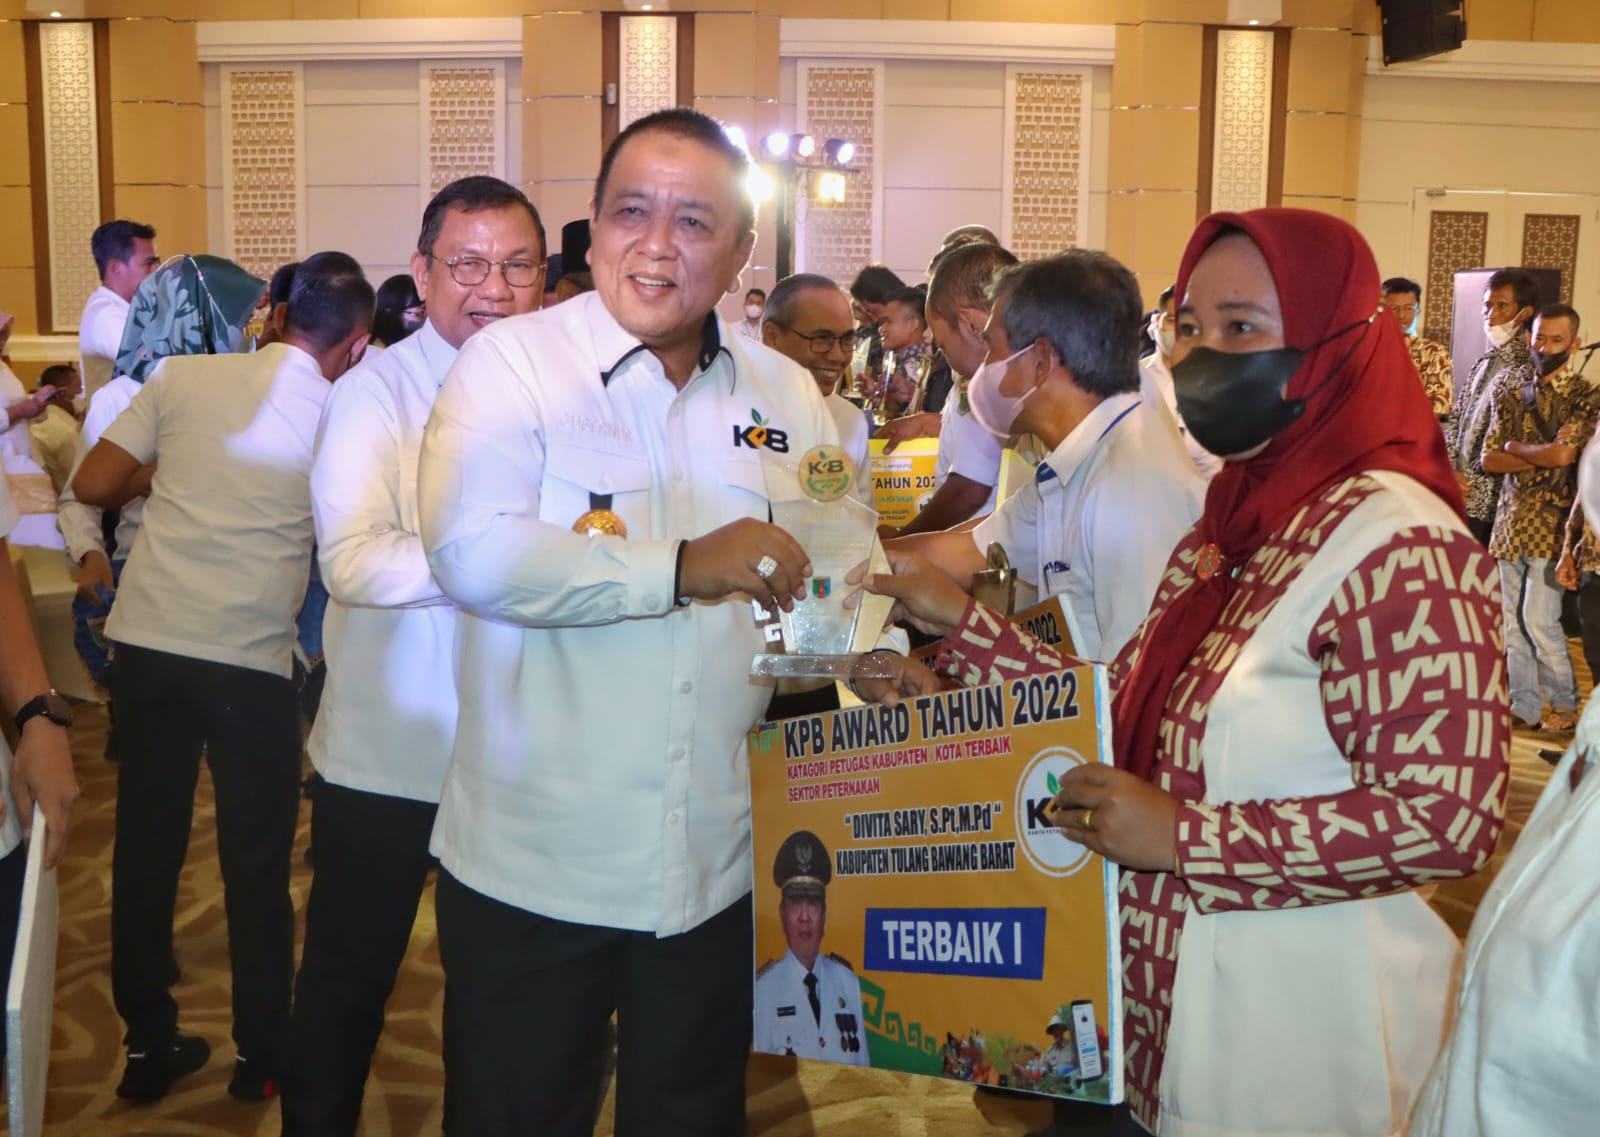 Berkomitmen Untuk Mensejahterakan Petani, Gubernur Arinal Djunaidi Berikan Apresiasi dan Penghargaan Pada KPB Award 2022